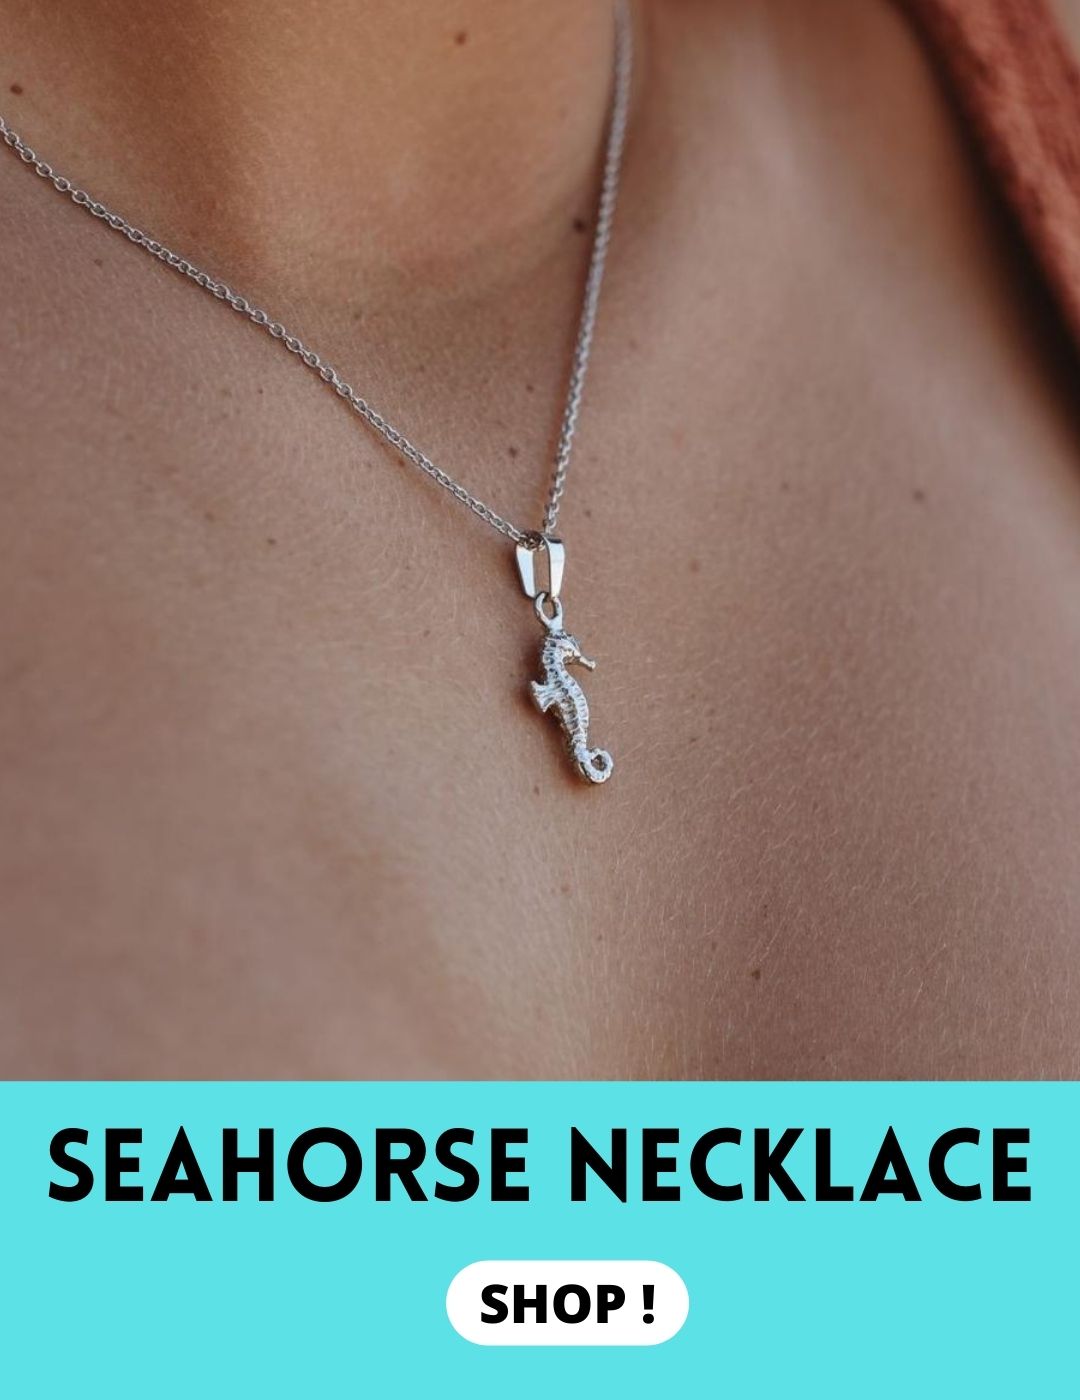 Seahorse pregnancy facts